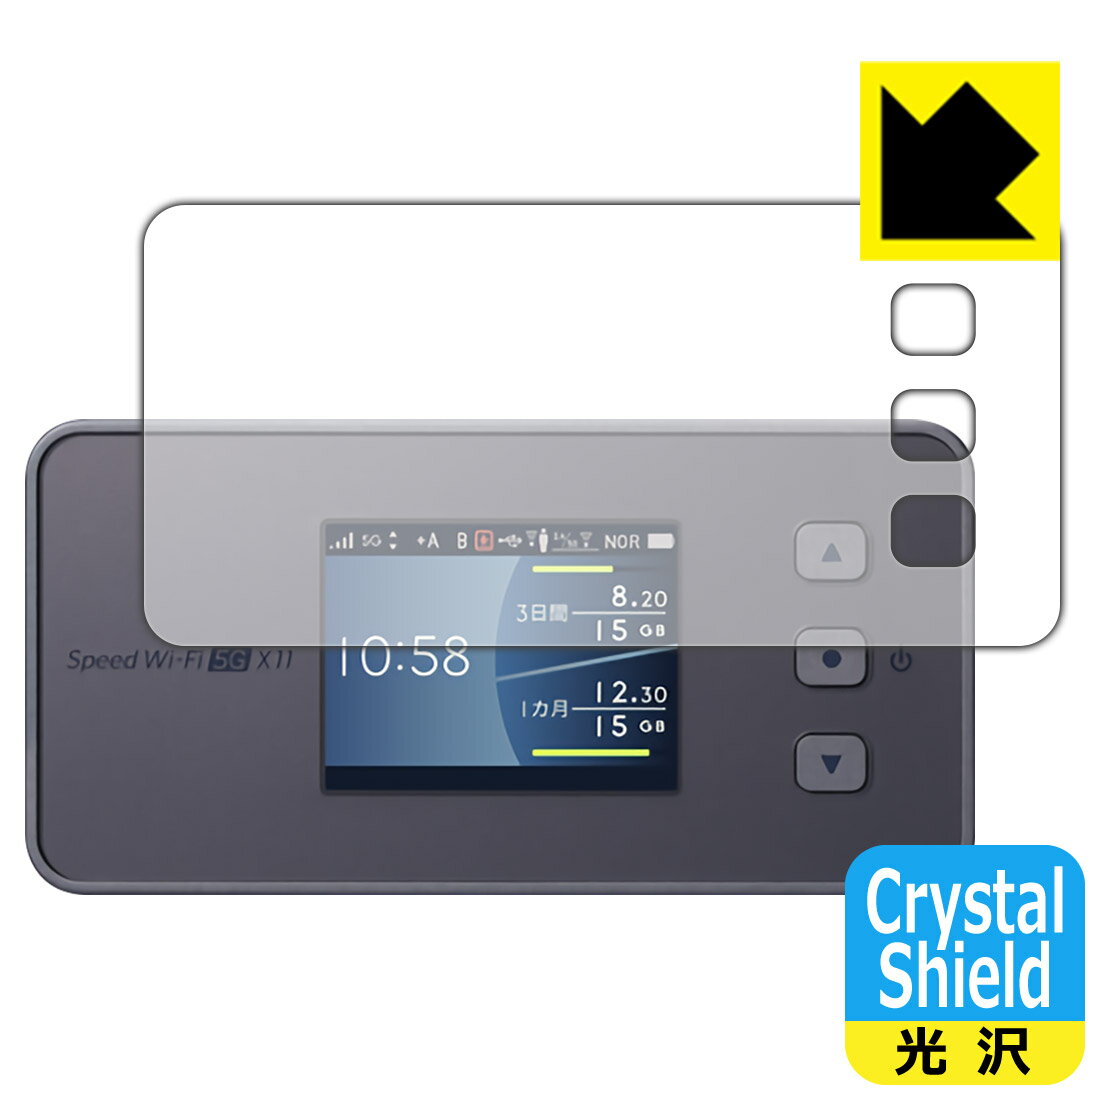 Crystal Shield Speed Wi-Fi 5G X11 (3枚セット) 日本製 自社製造直販